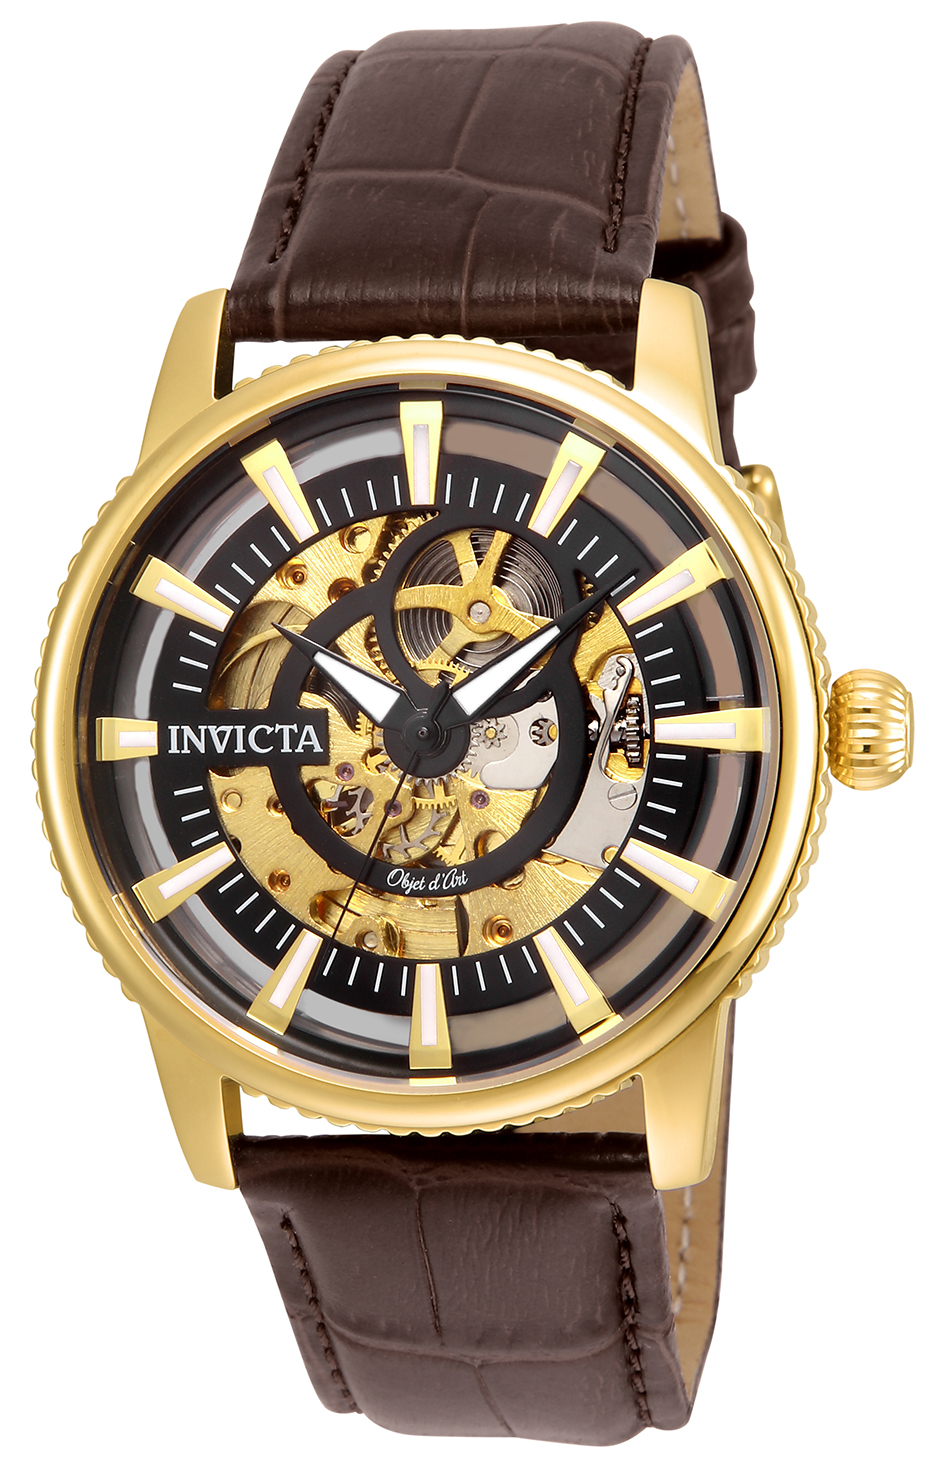 Invicta Objet D Art Automatic Men's Watch - 42mm, Brown (22642)